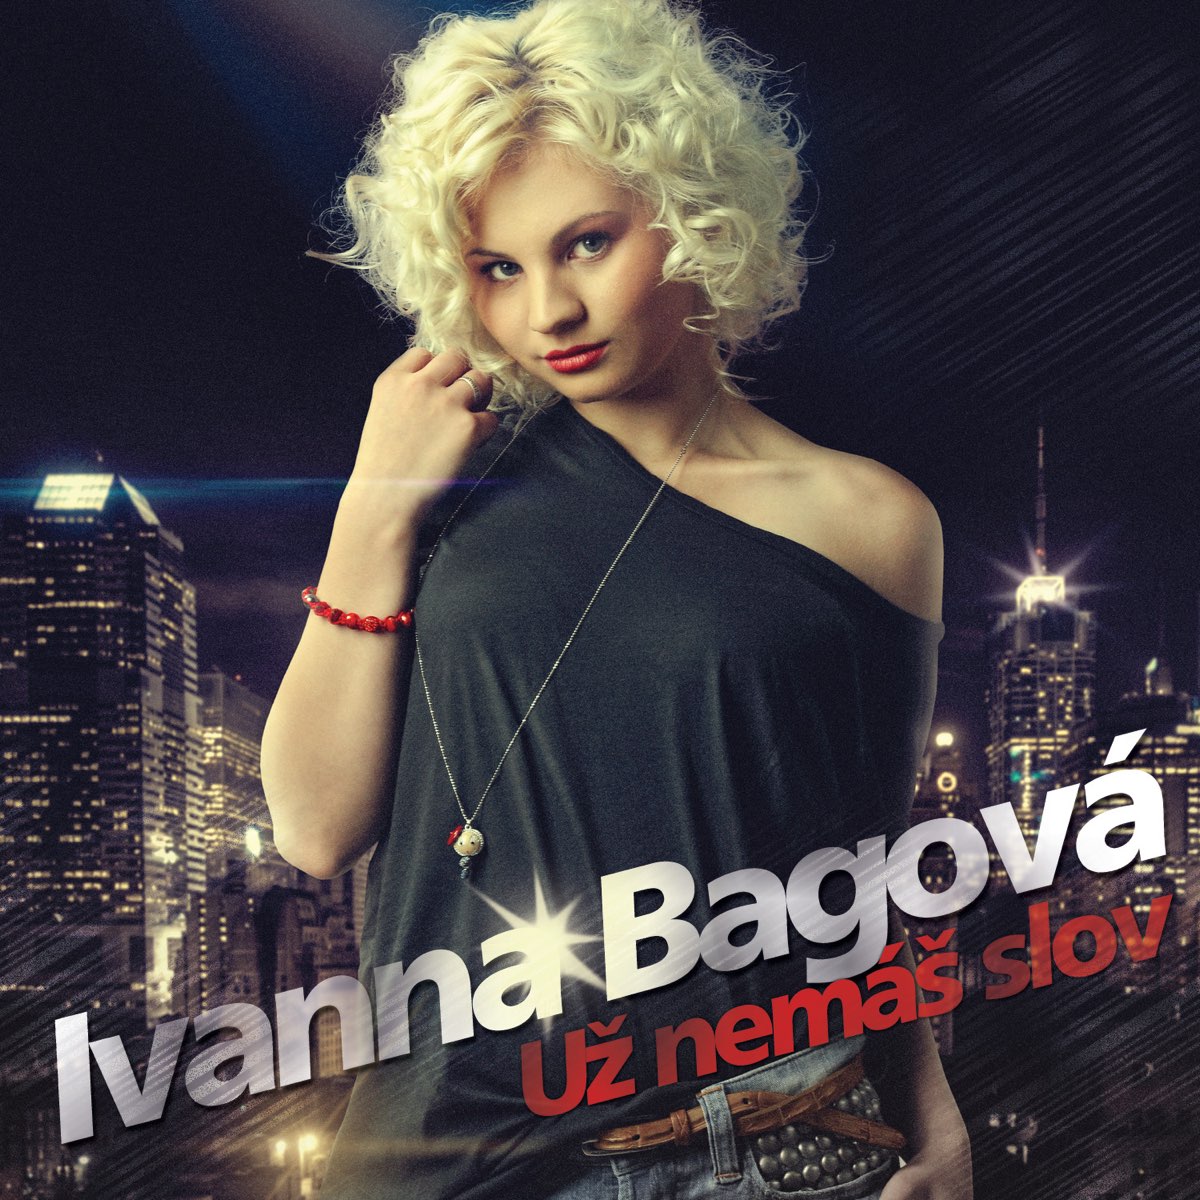 Uz Nemas Slov - Single by Ivanna Bagova on Apple Music